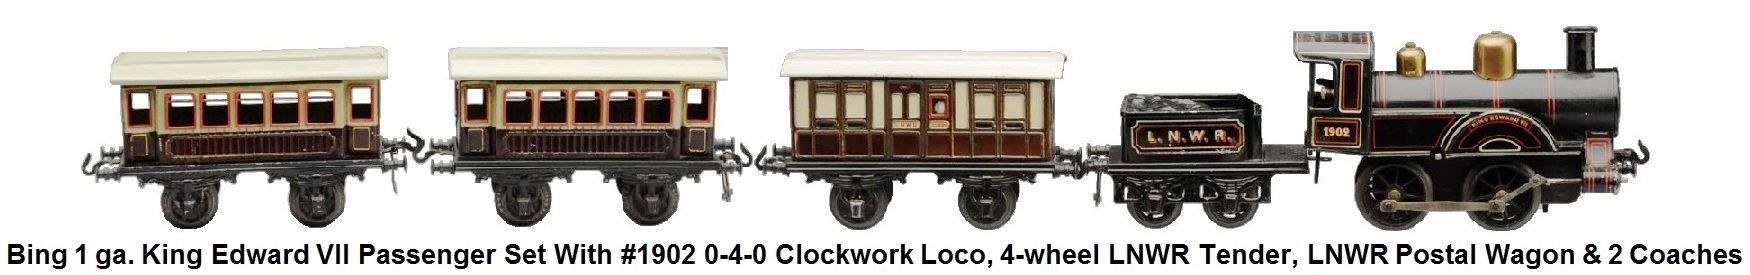 Bing 1 Gauge King Edward VII Passenger Set with #1902 0-4-0 Clockwork Loco, 4-wheel LNWR Tender, LNWR Postal Van and 2 Coaches